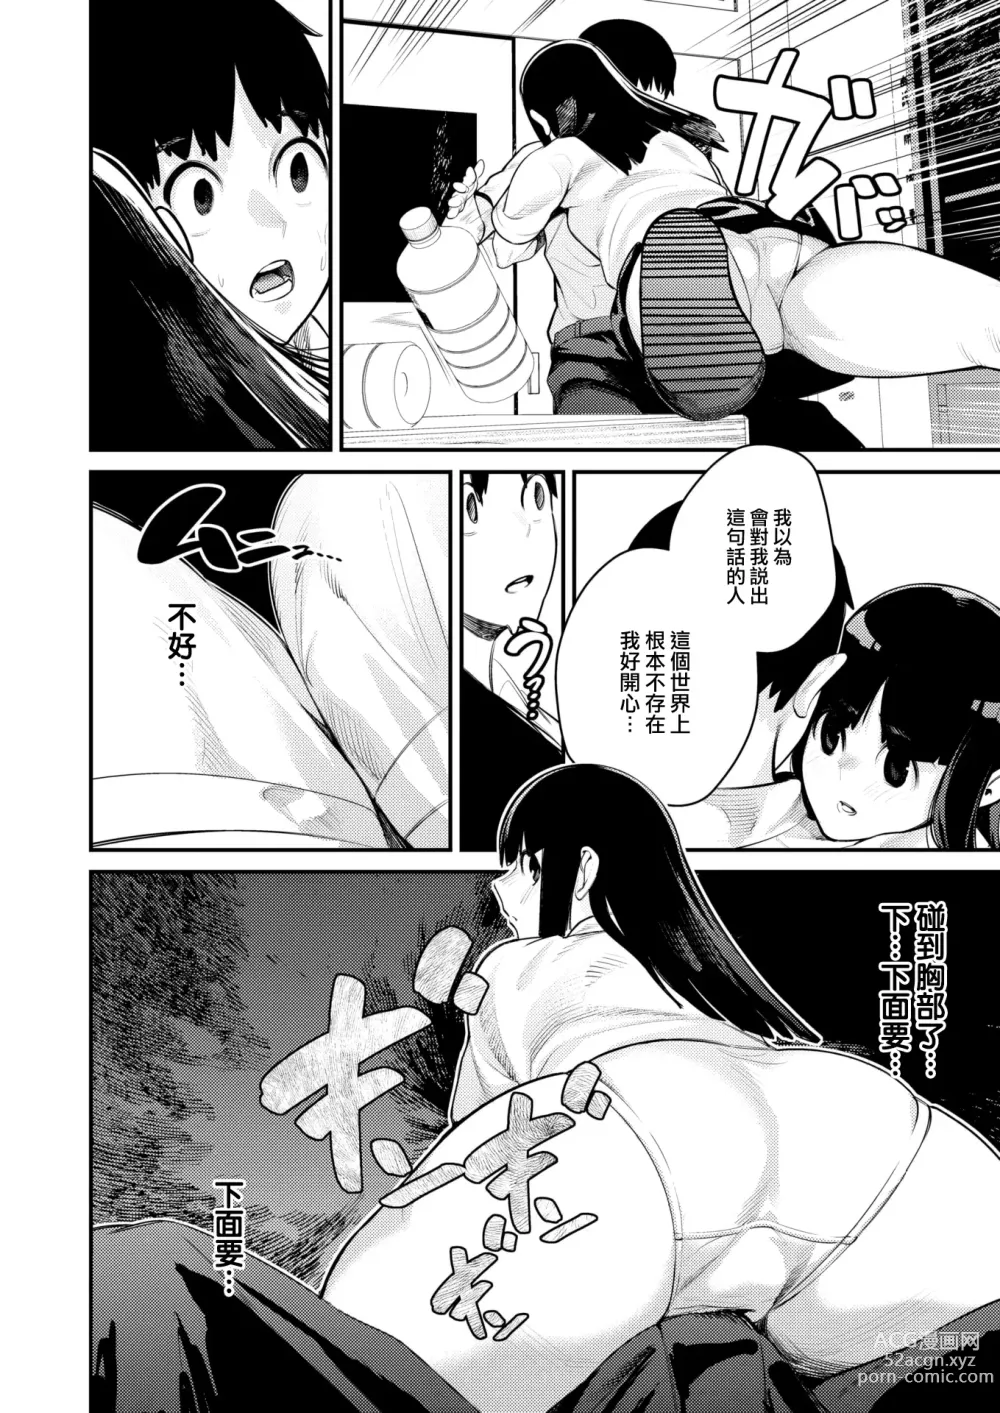 Page 9 of manga Kaijin Netsuai Mokushiroku